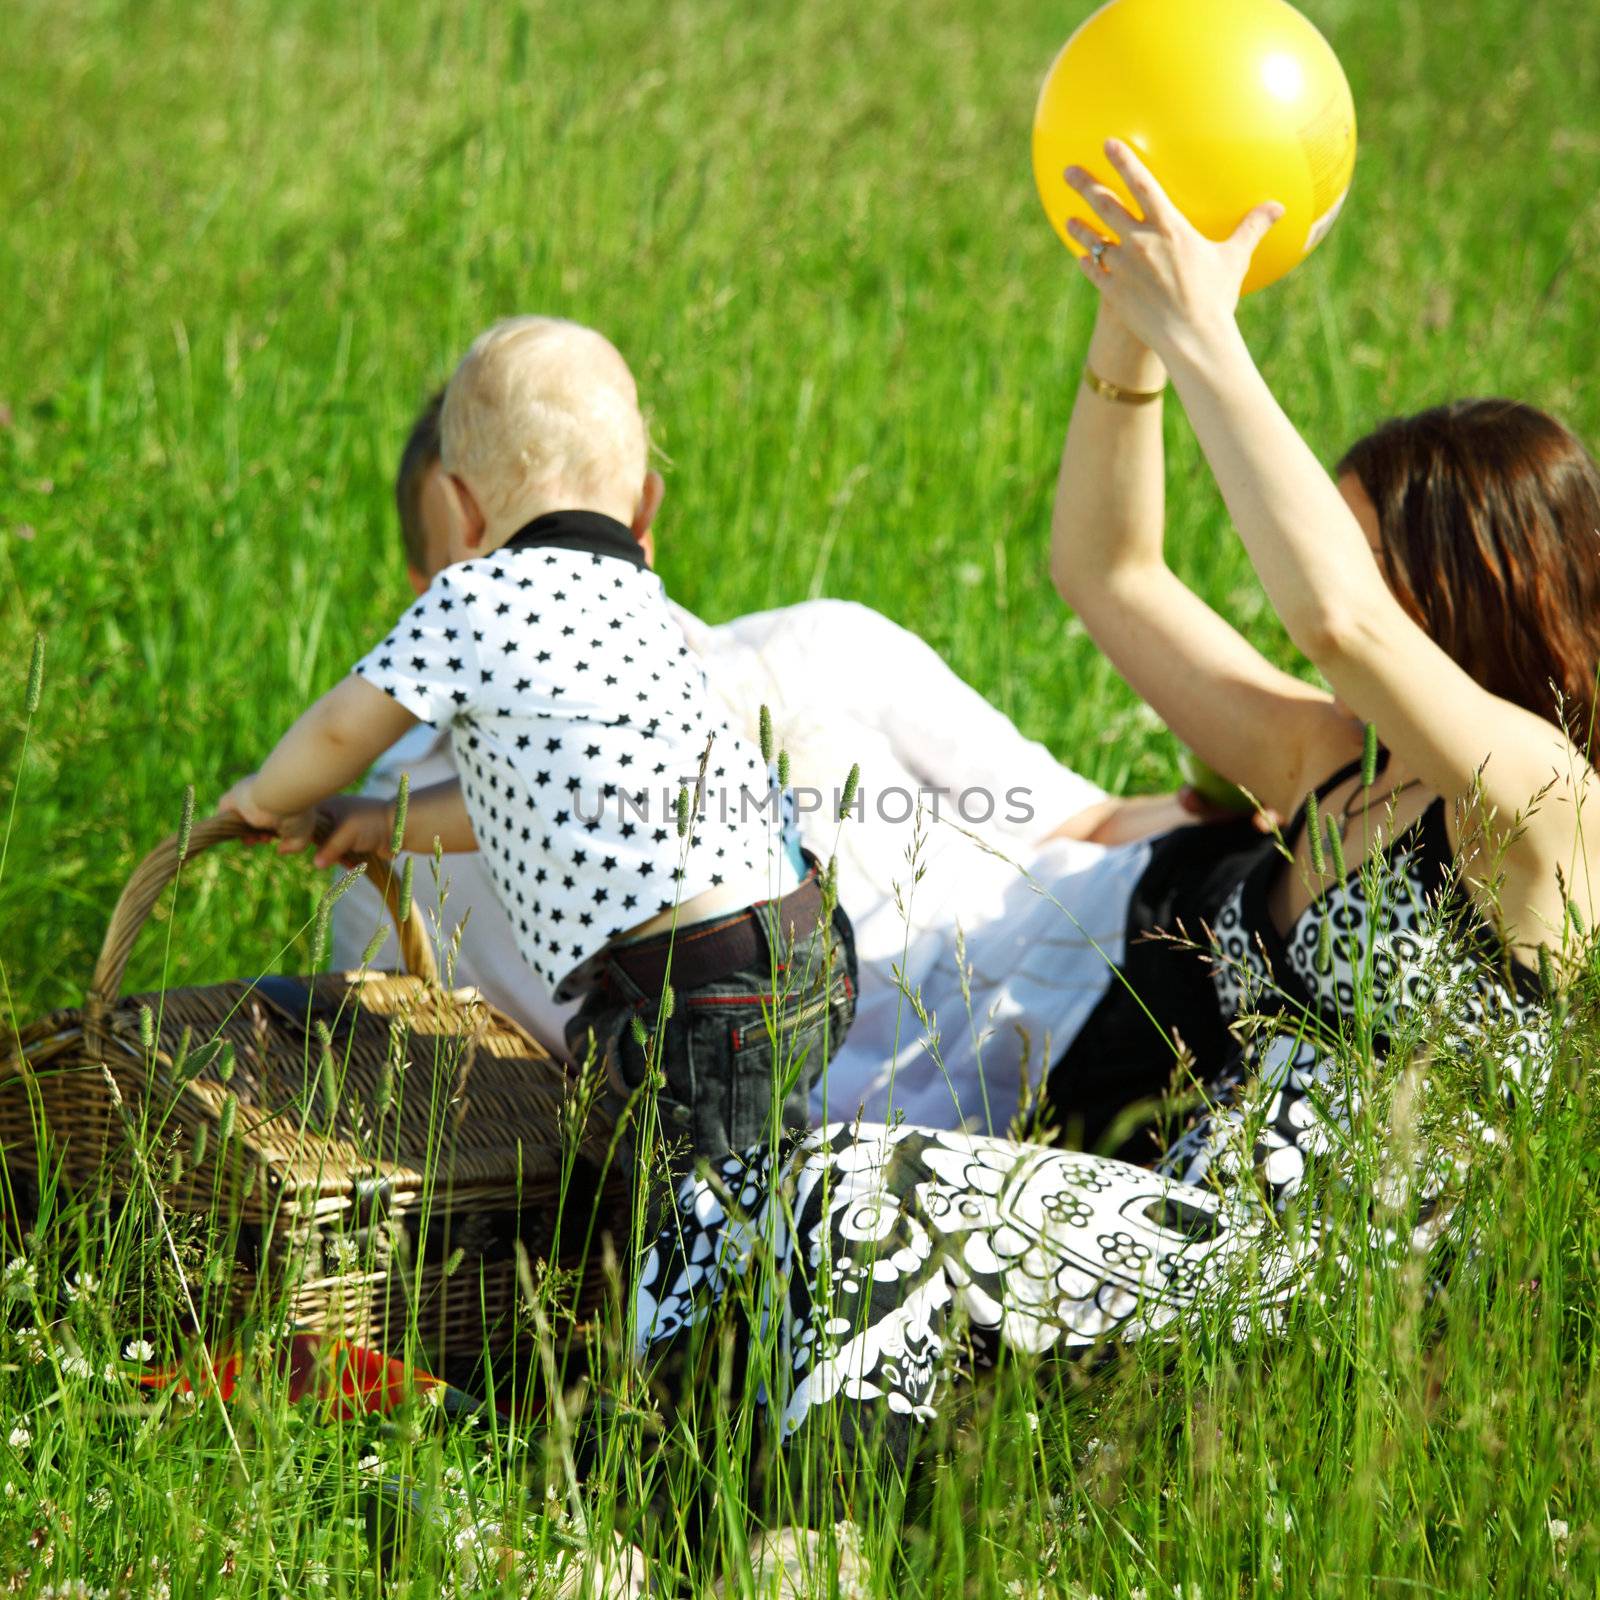 family picnic by Yellowj